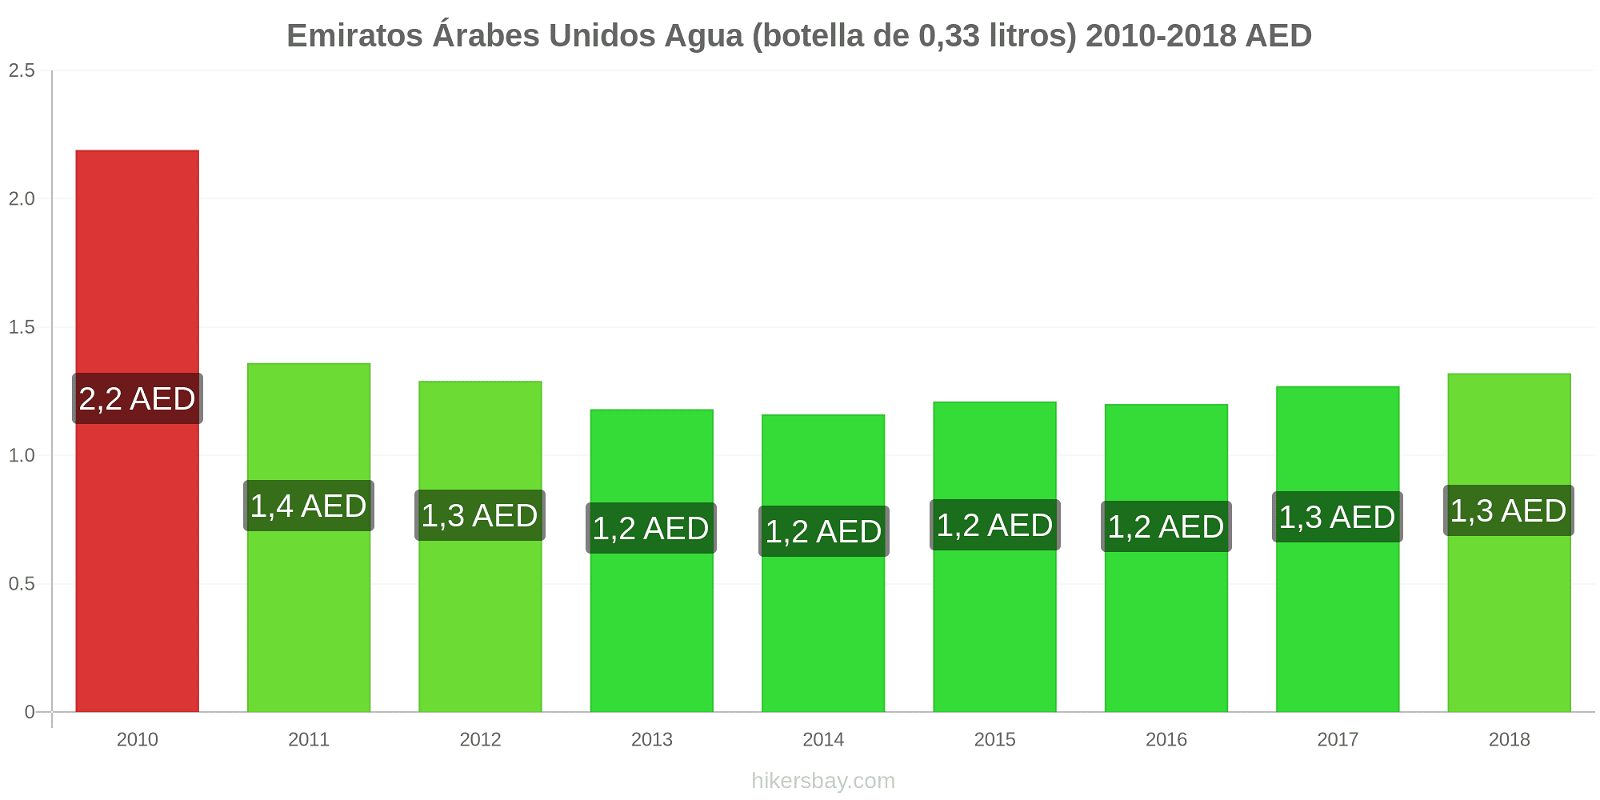 Emiratos Árabes Unidos cambios de precios Agua (botella de 0.33 litros) hikersbay.com